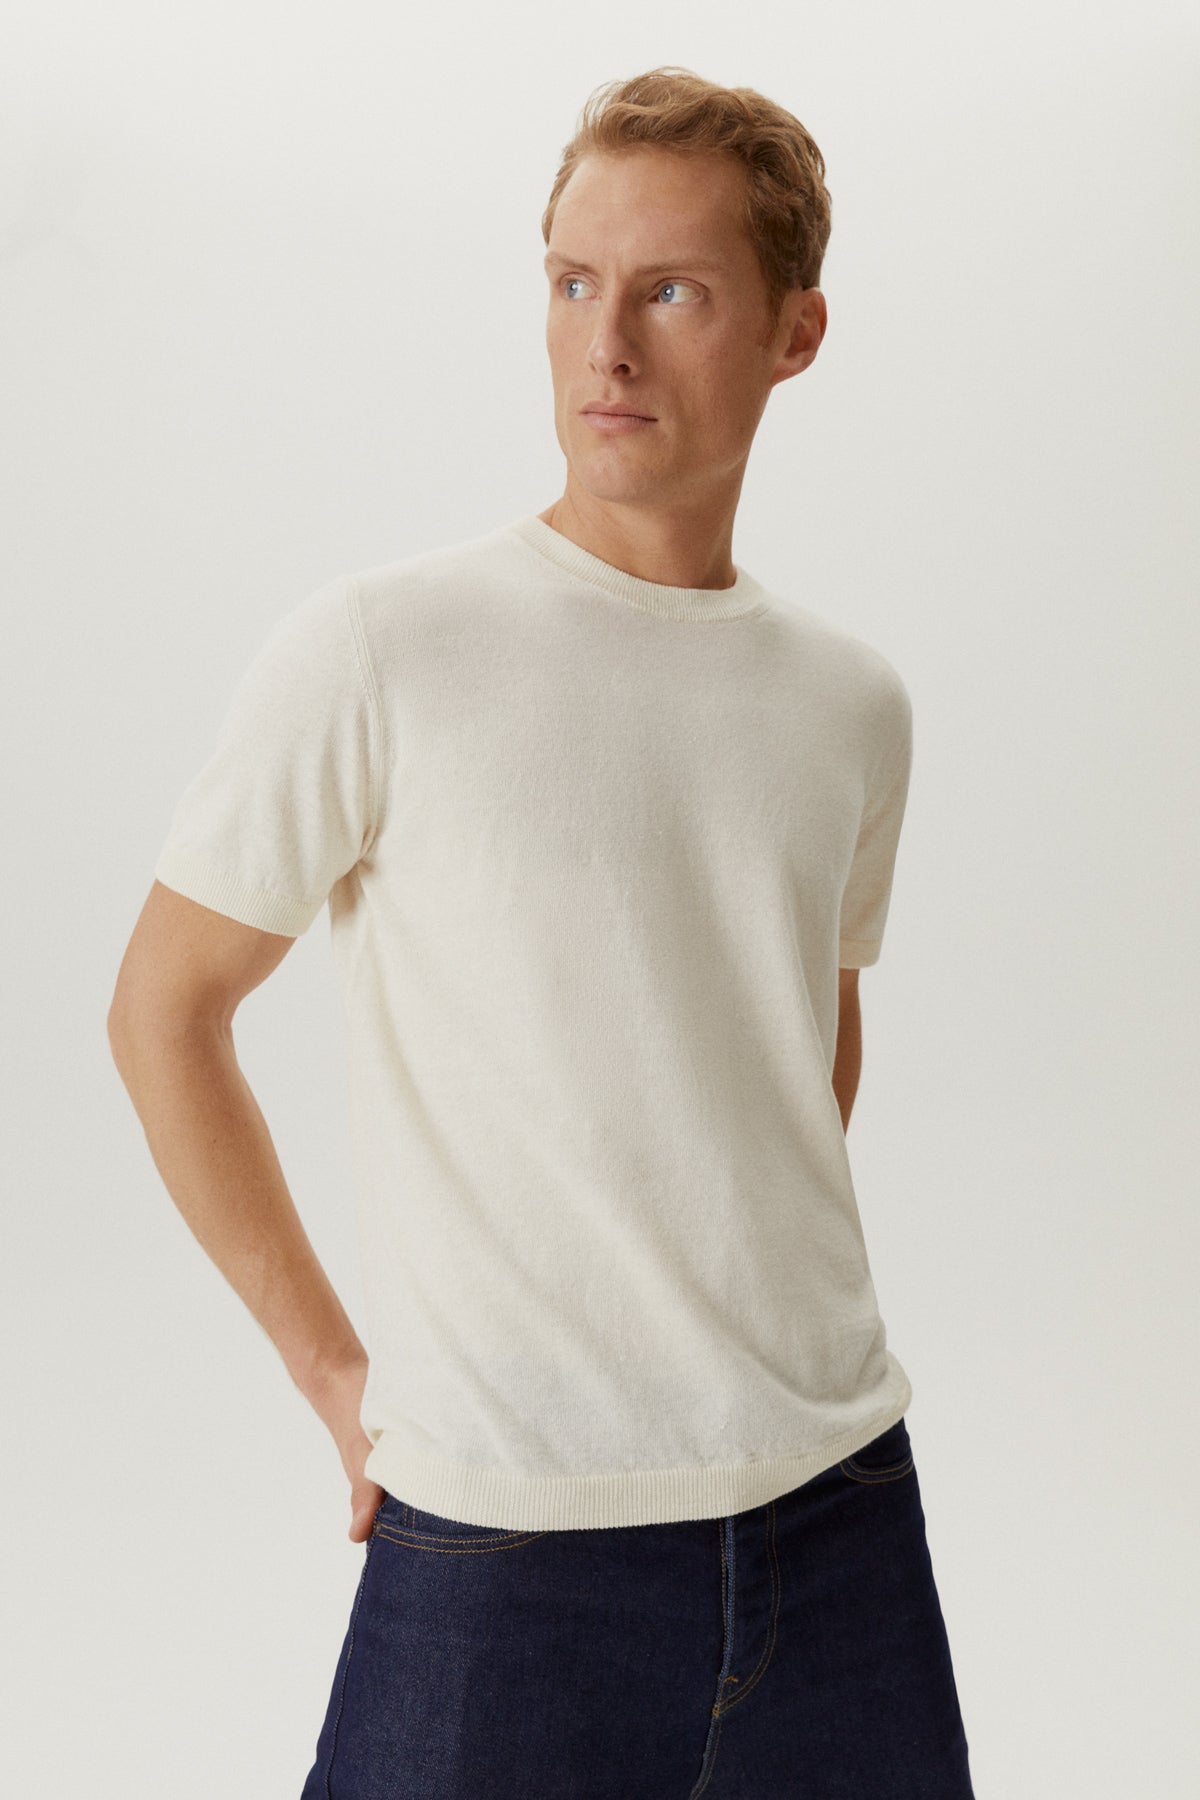 the linen cotton knit t shirt milk white